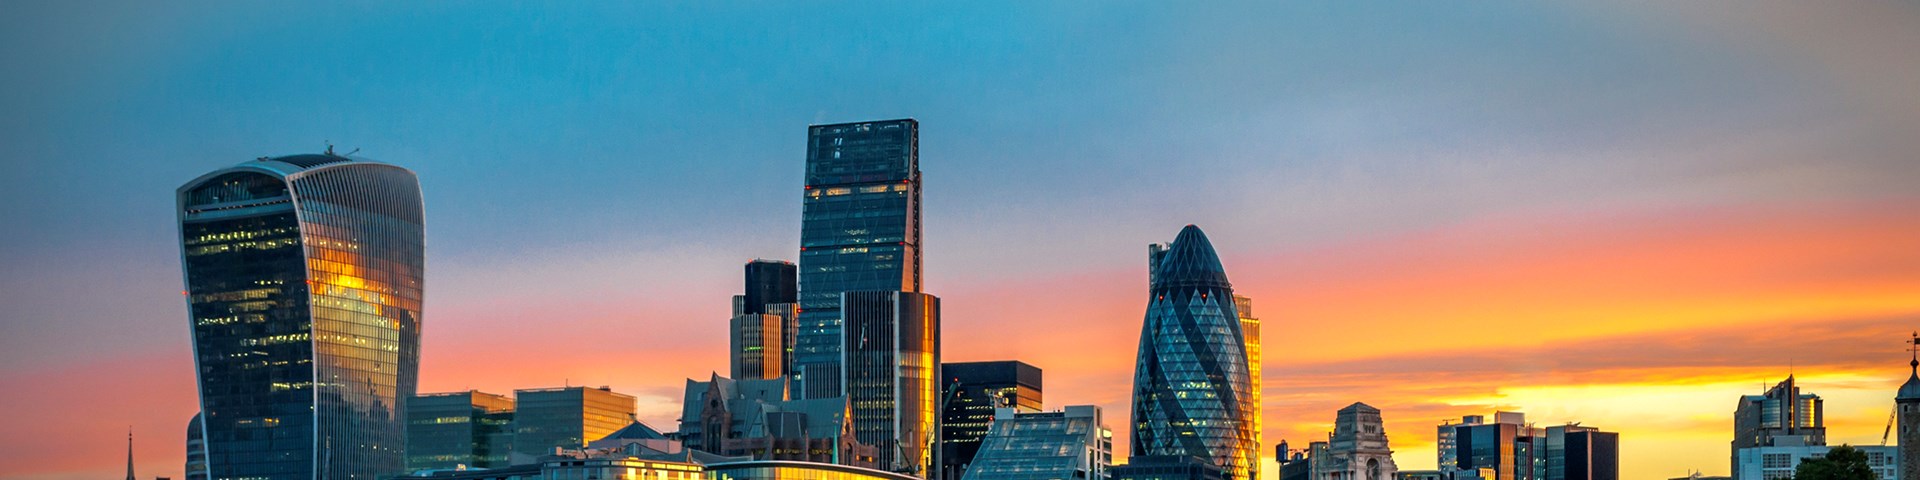 London financial district sunset skyline